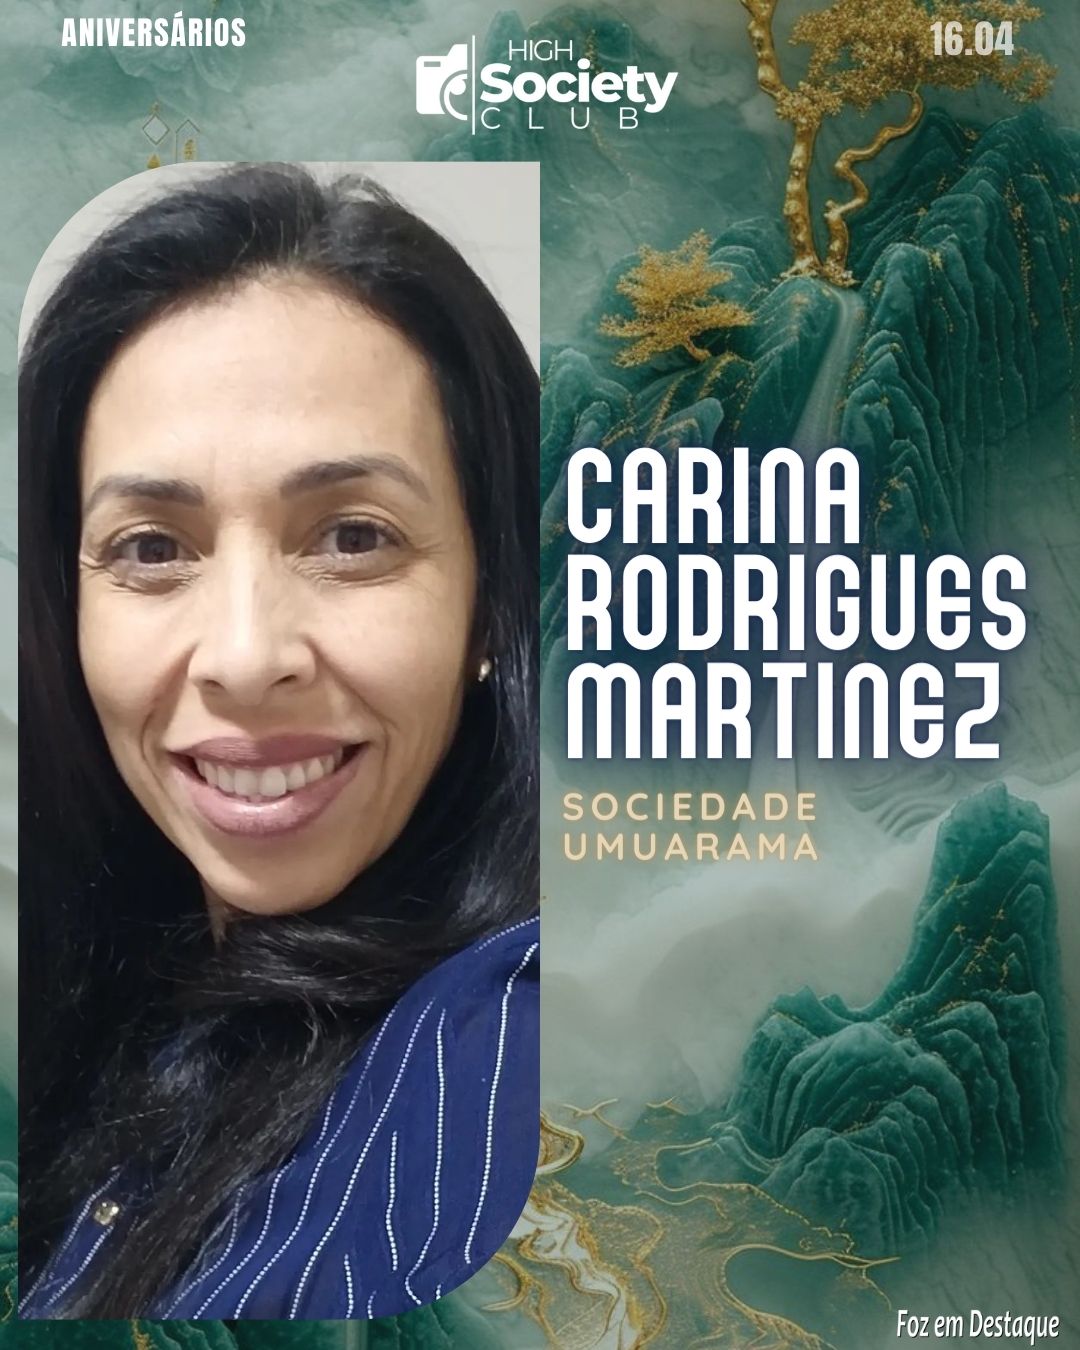 Carina Rodrigues Martinez - High Society Club Foz em Destaque